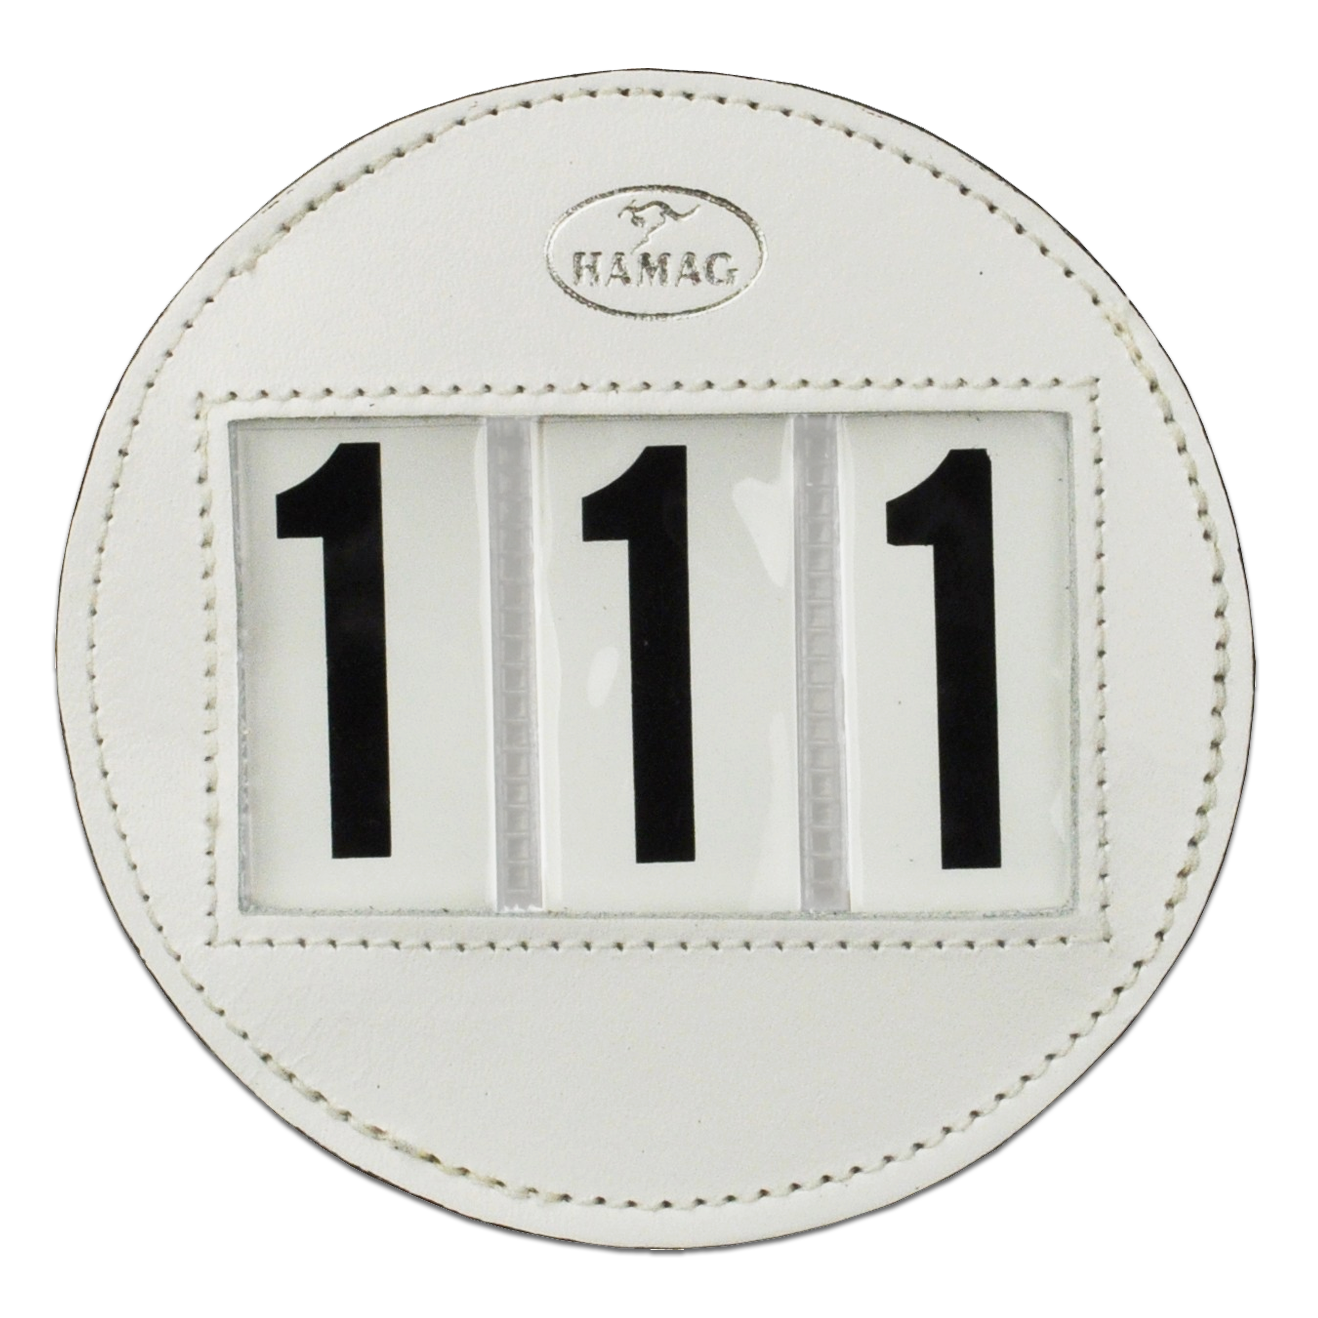 Hamag™ Round Leather Saddle Cloth Number Holders (Pair) – White 3 Digit